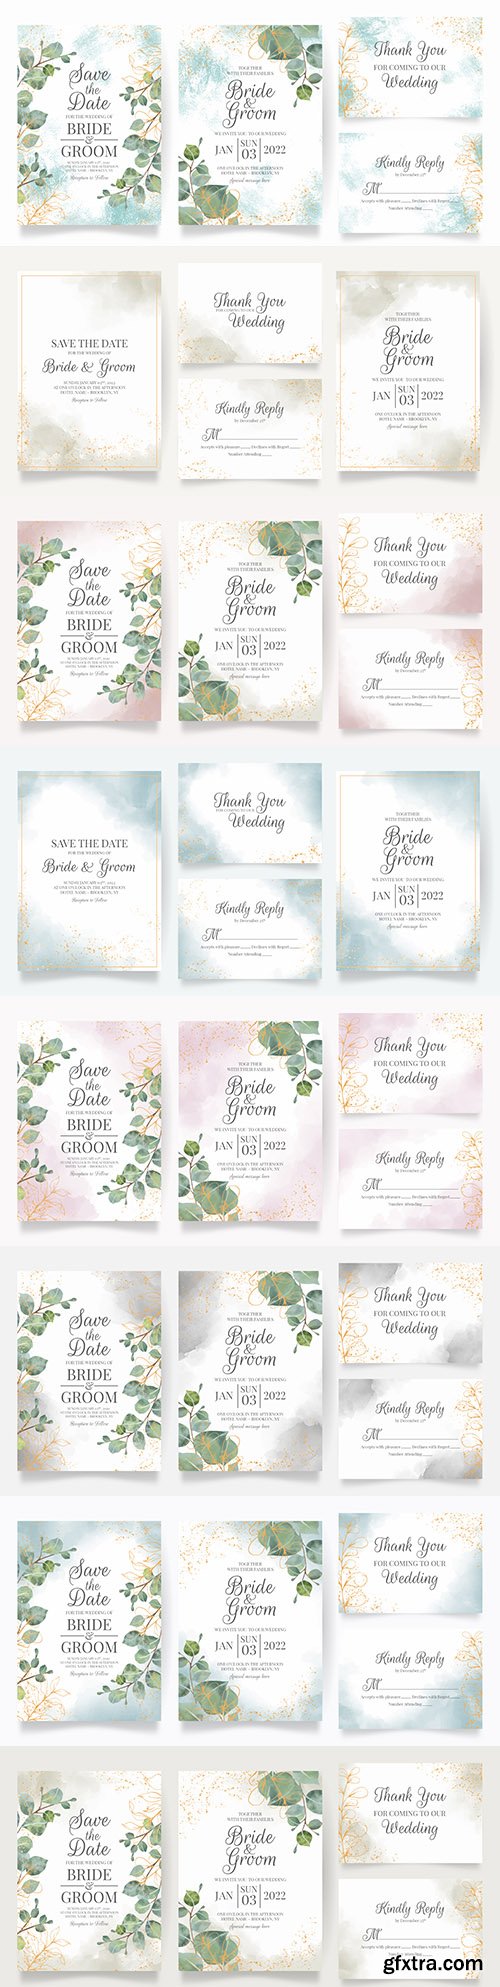 Beautiful floral frame wedding invitation template
